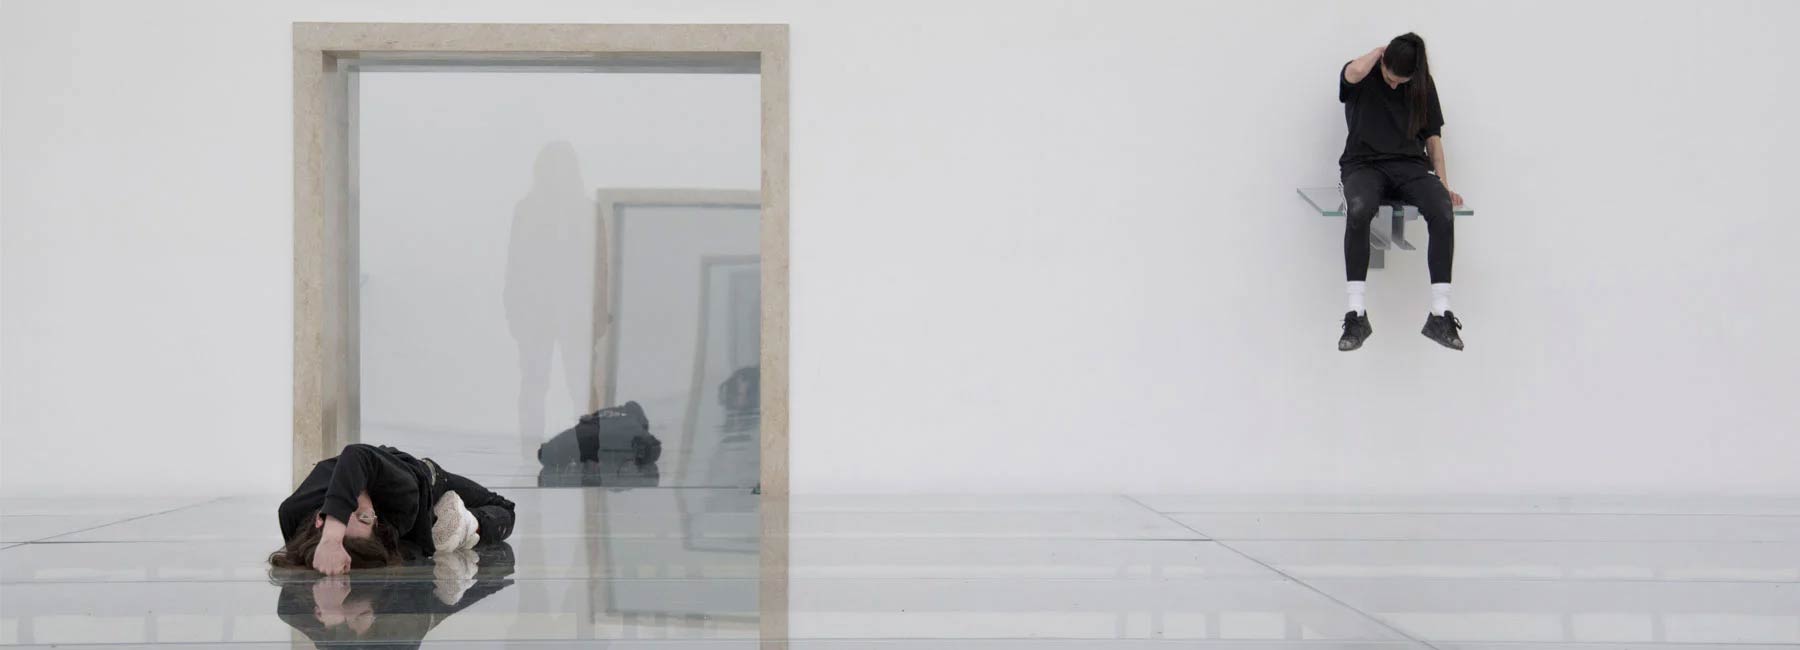 Eliza Douglas and Franziska Aigner in ANNE IMHOF, FAUST (2017), German Pavilion at the 57th International Art Exhibition – La Biennale di Venezia. Photo: © Nadine Fraczkowski